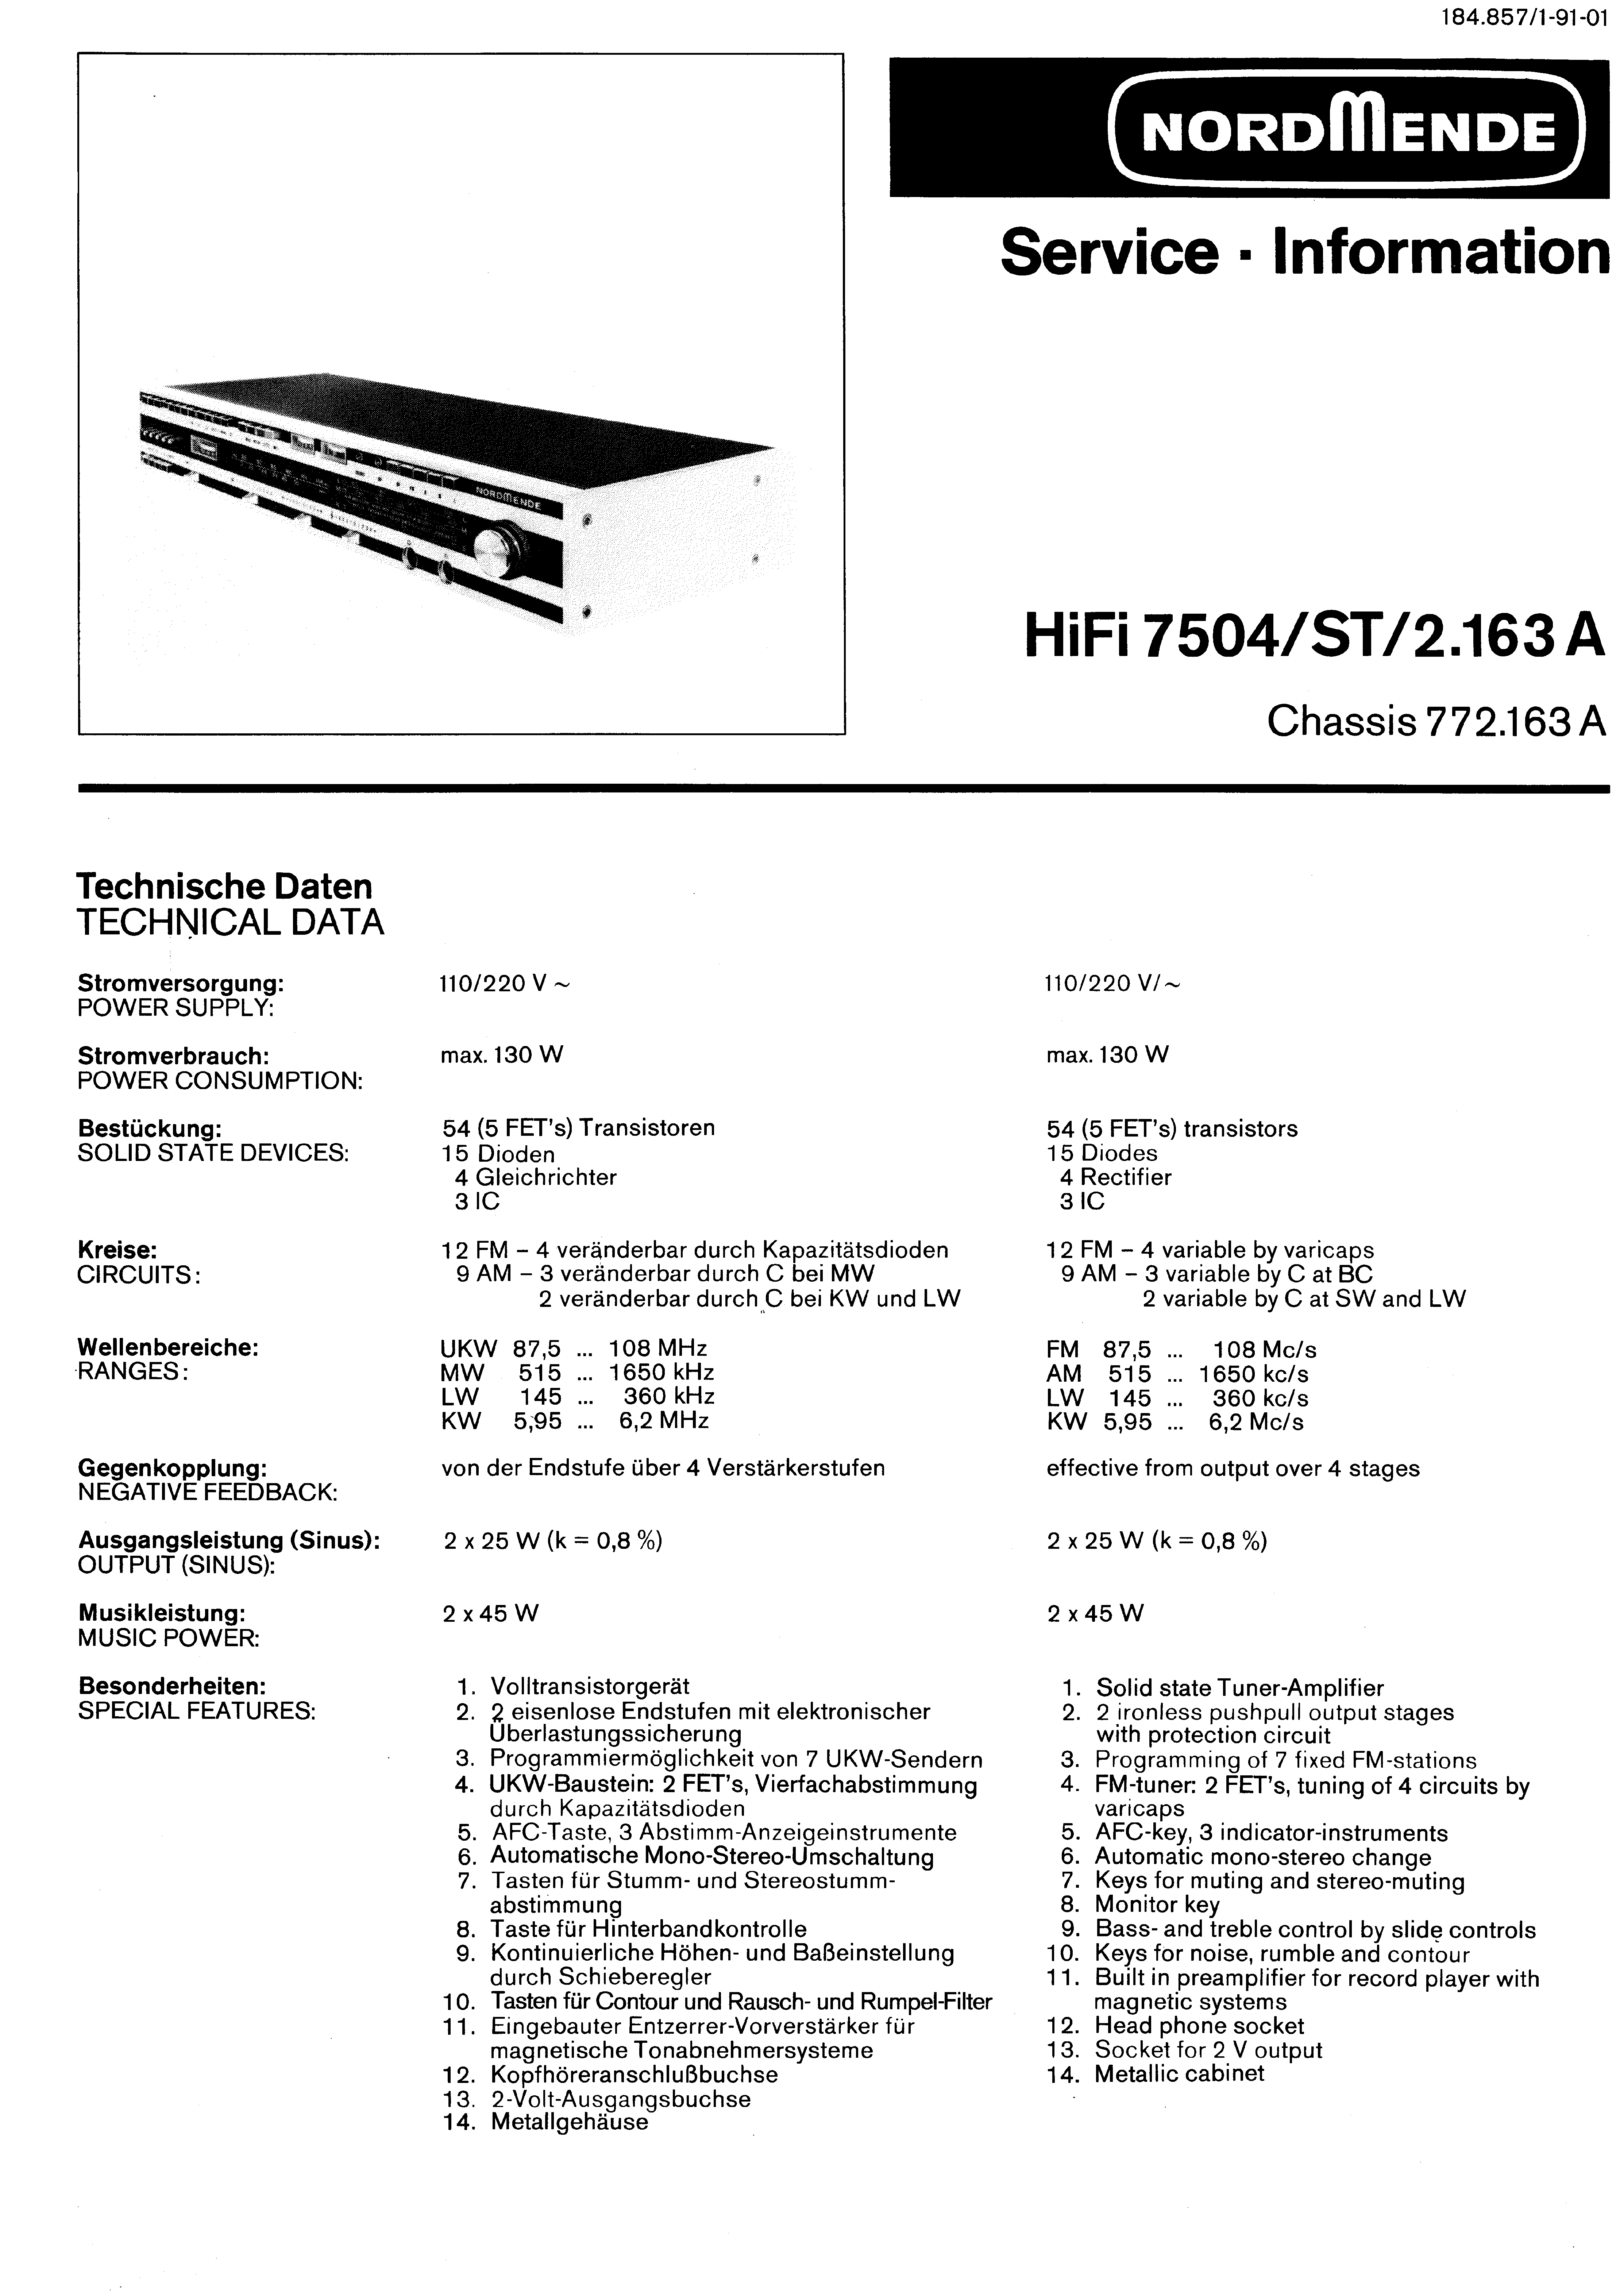 Service Manual-Anleitung für Nordmende HiFi 7504 ST 2.163 A 